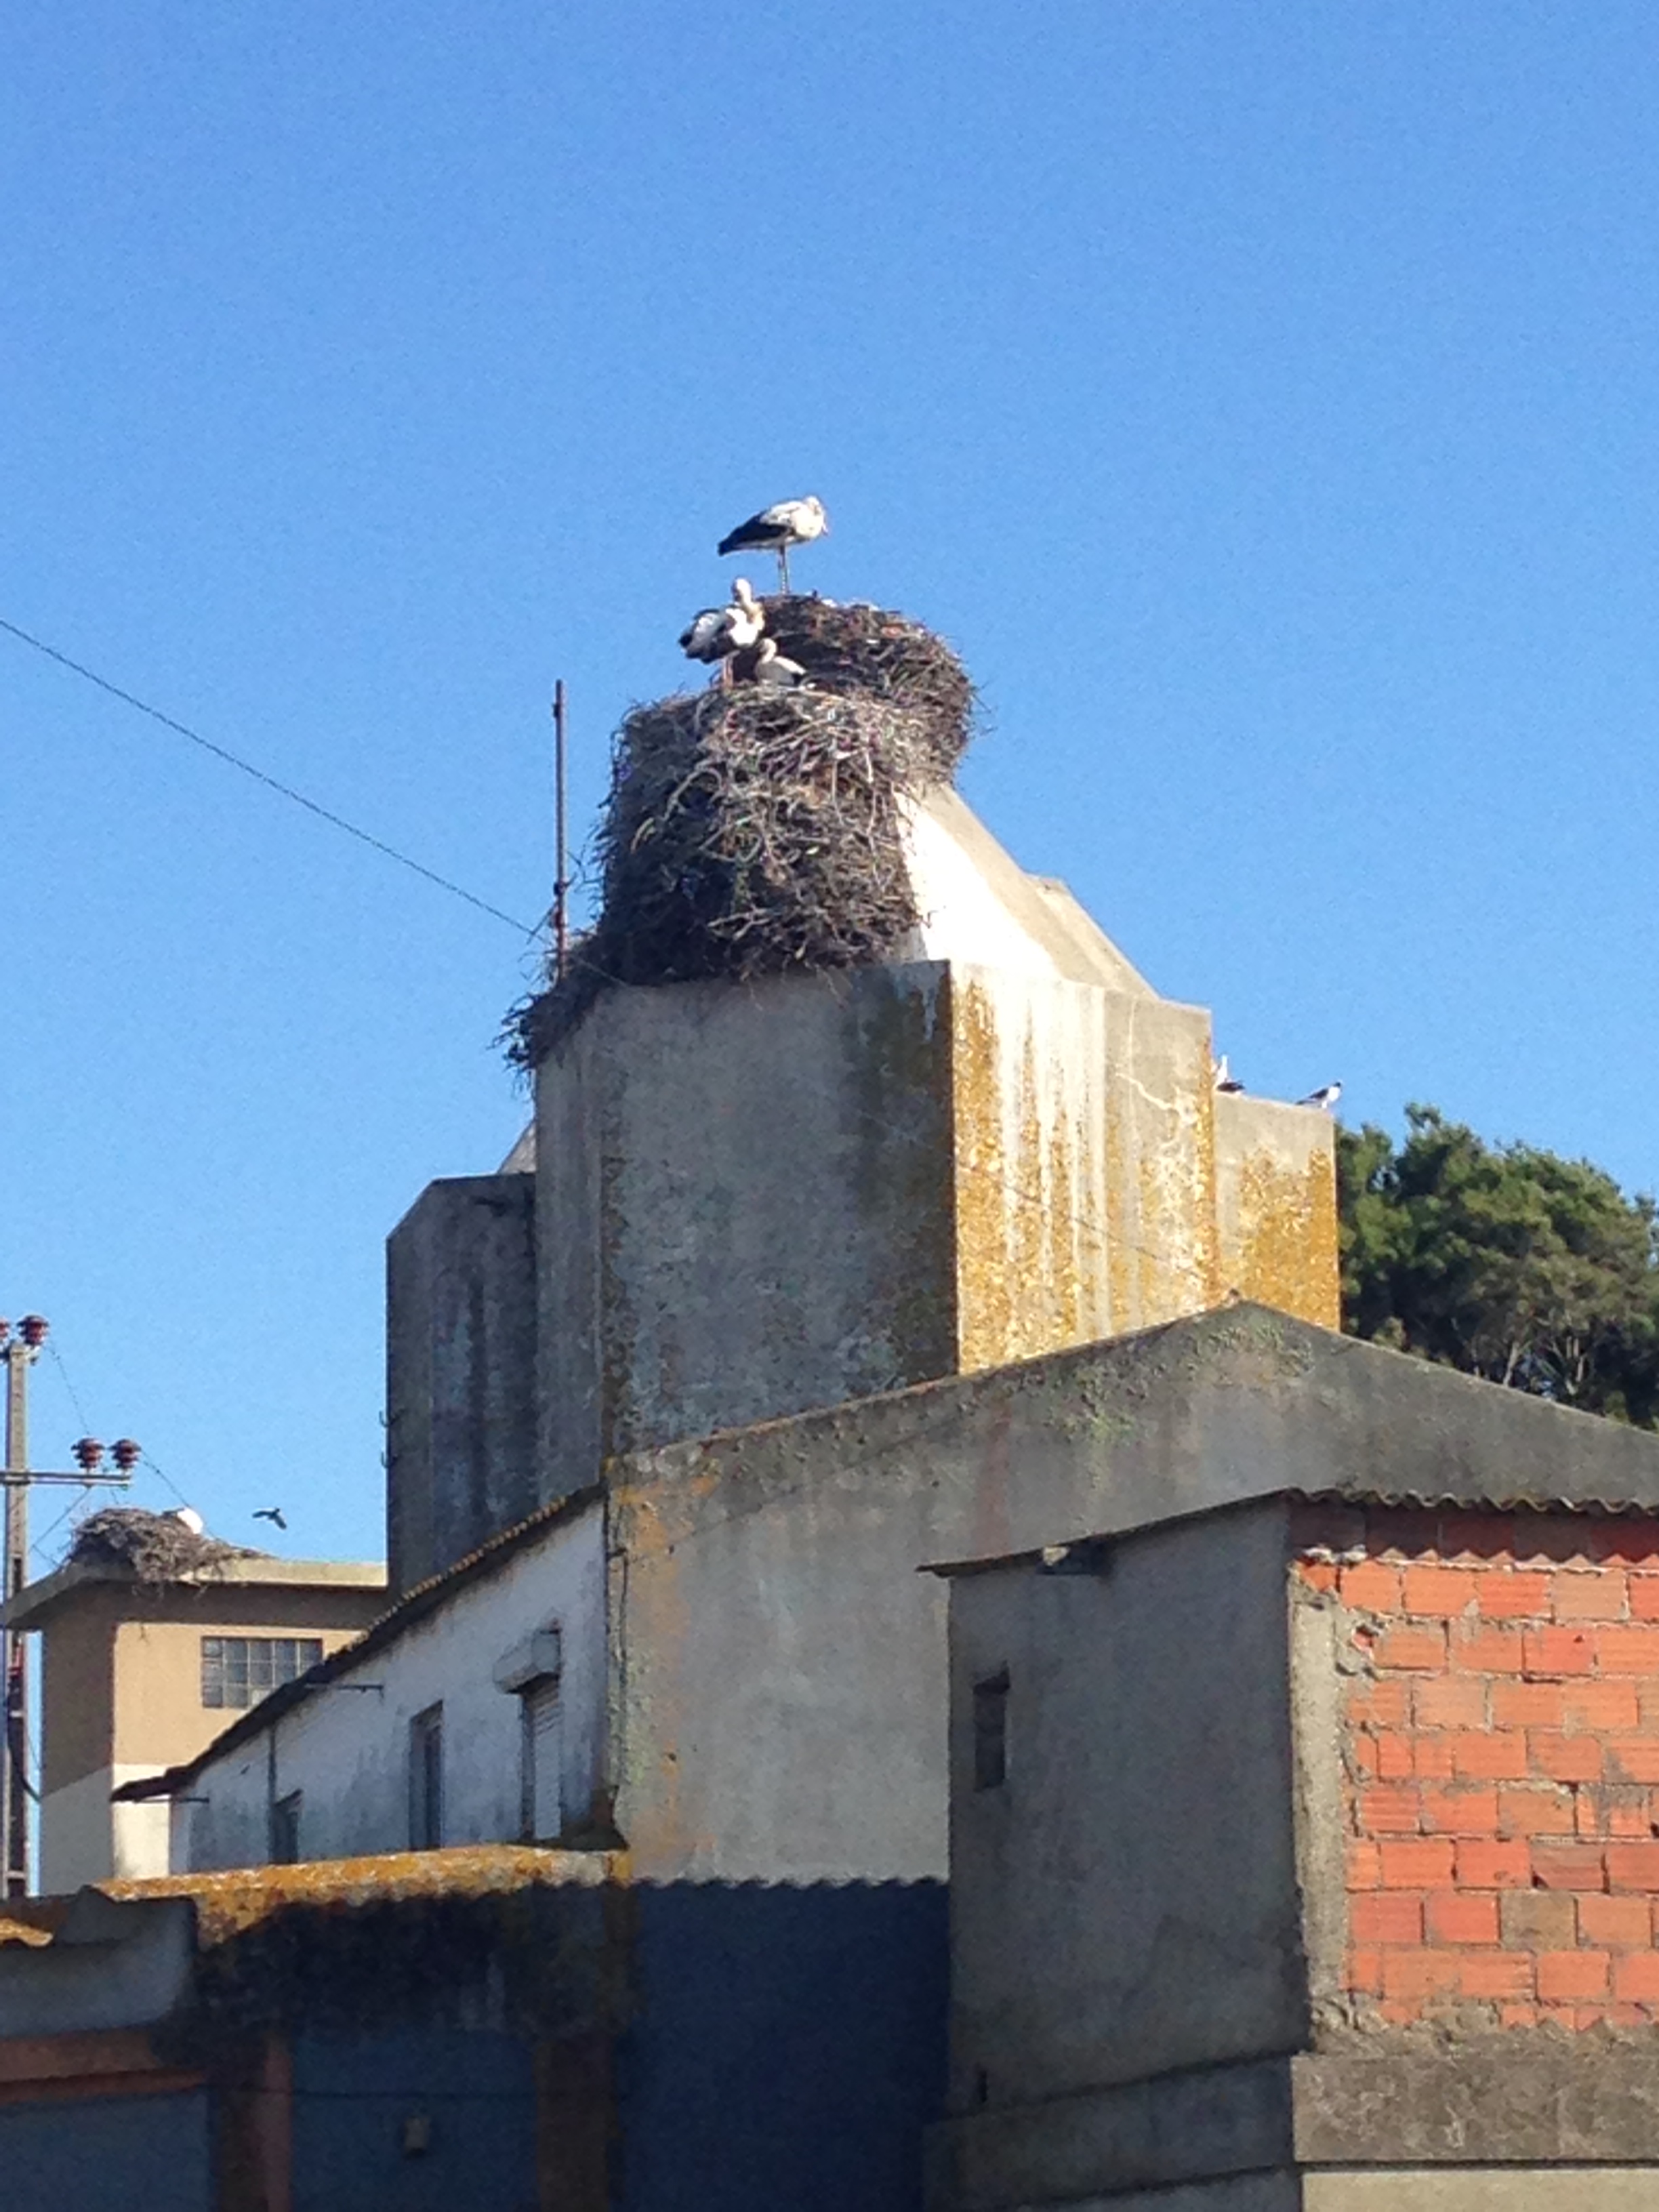 Storks nest at Comporta (06/2014)